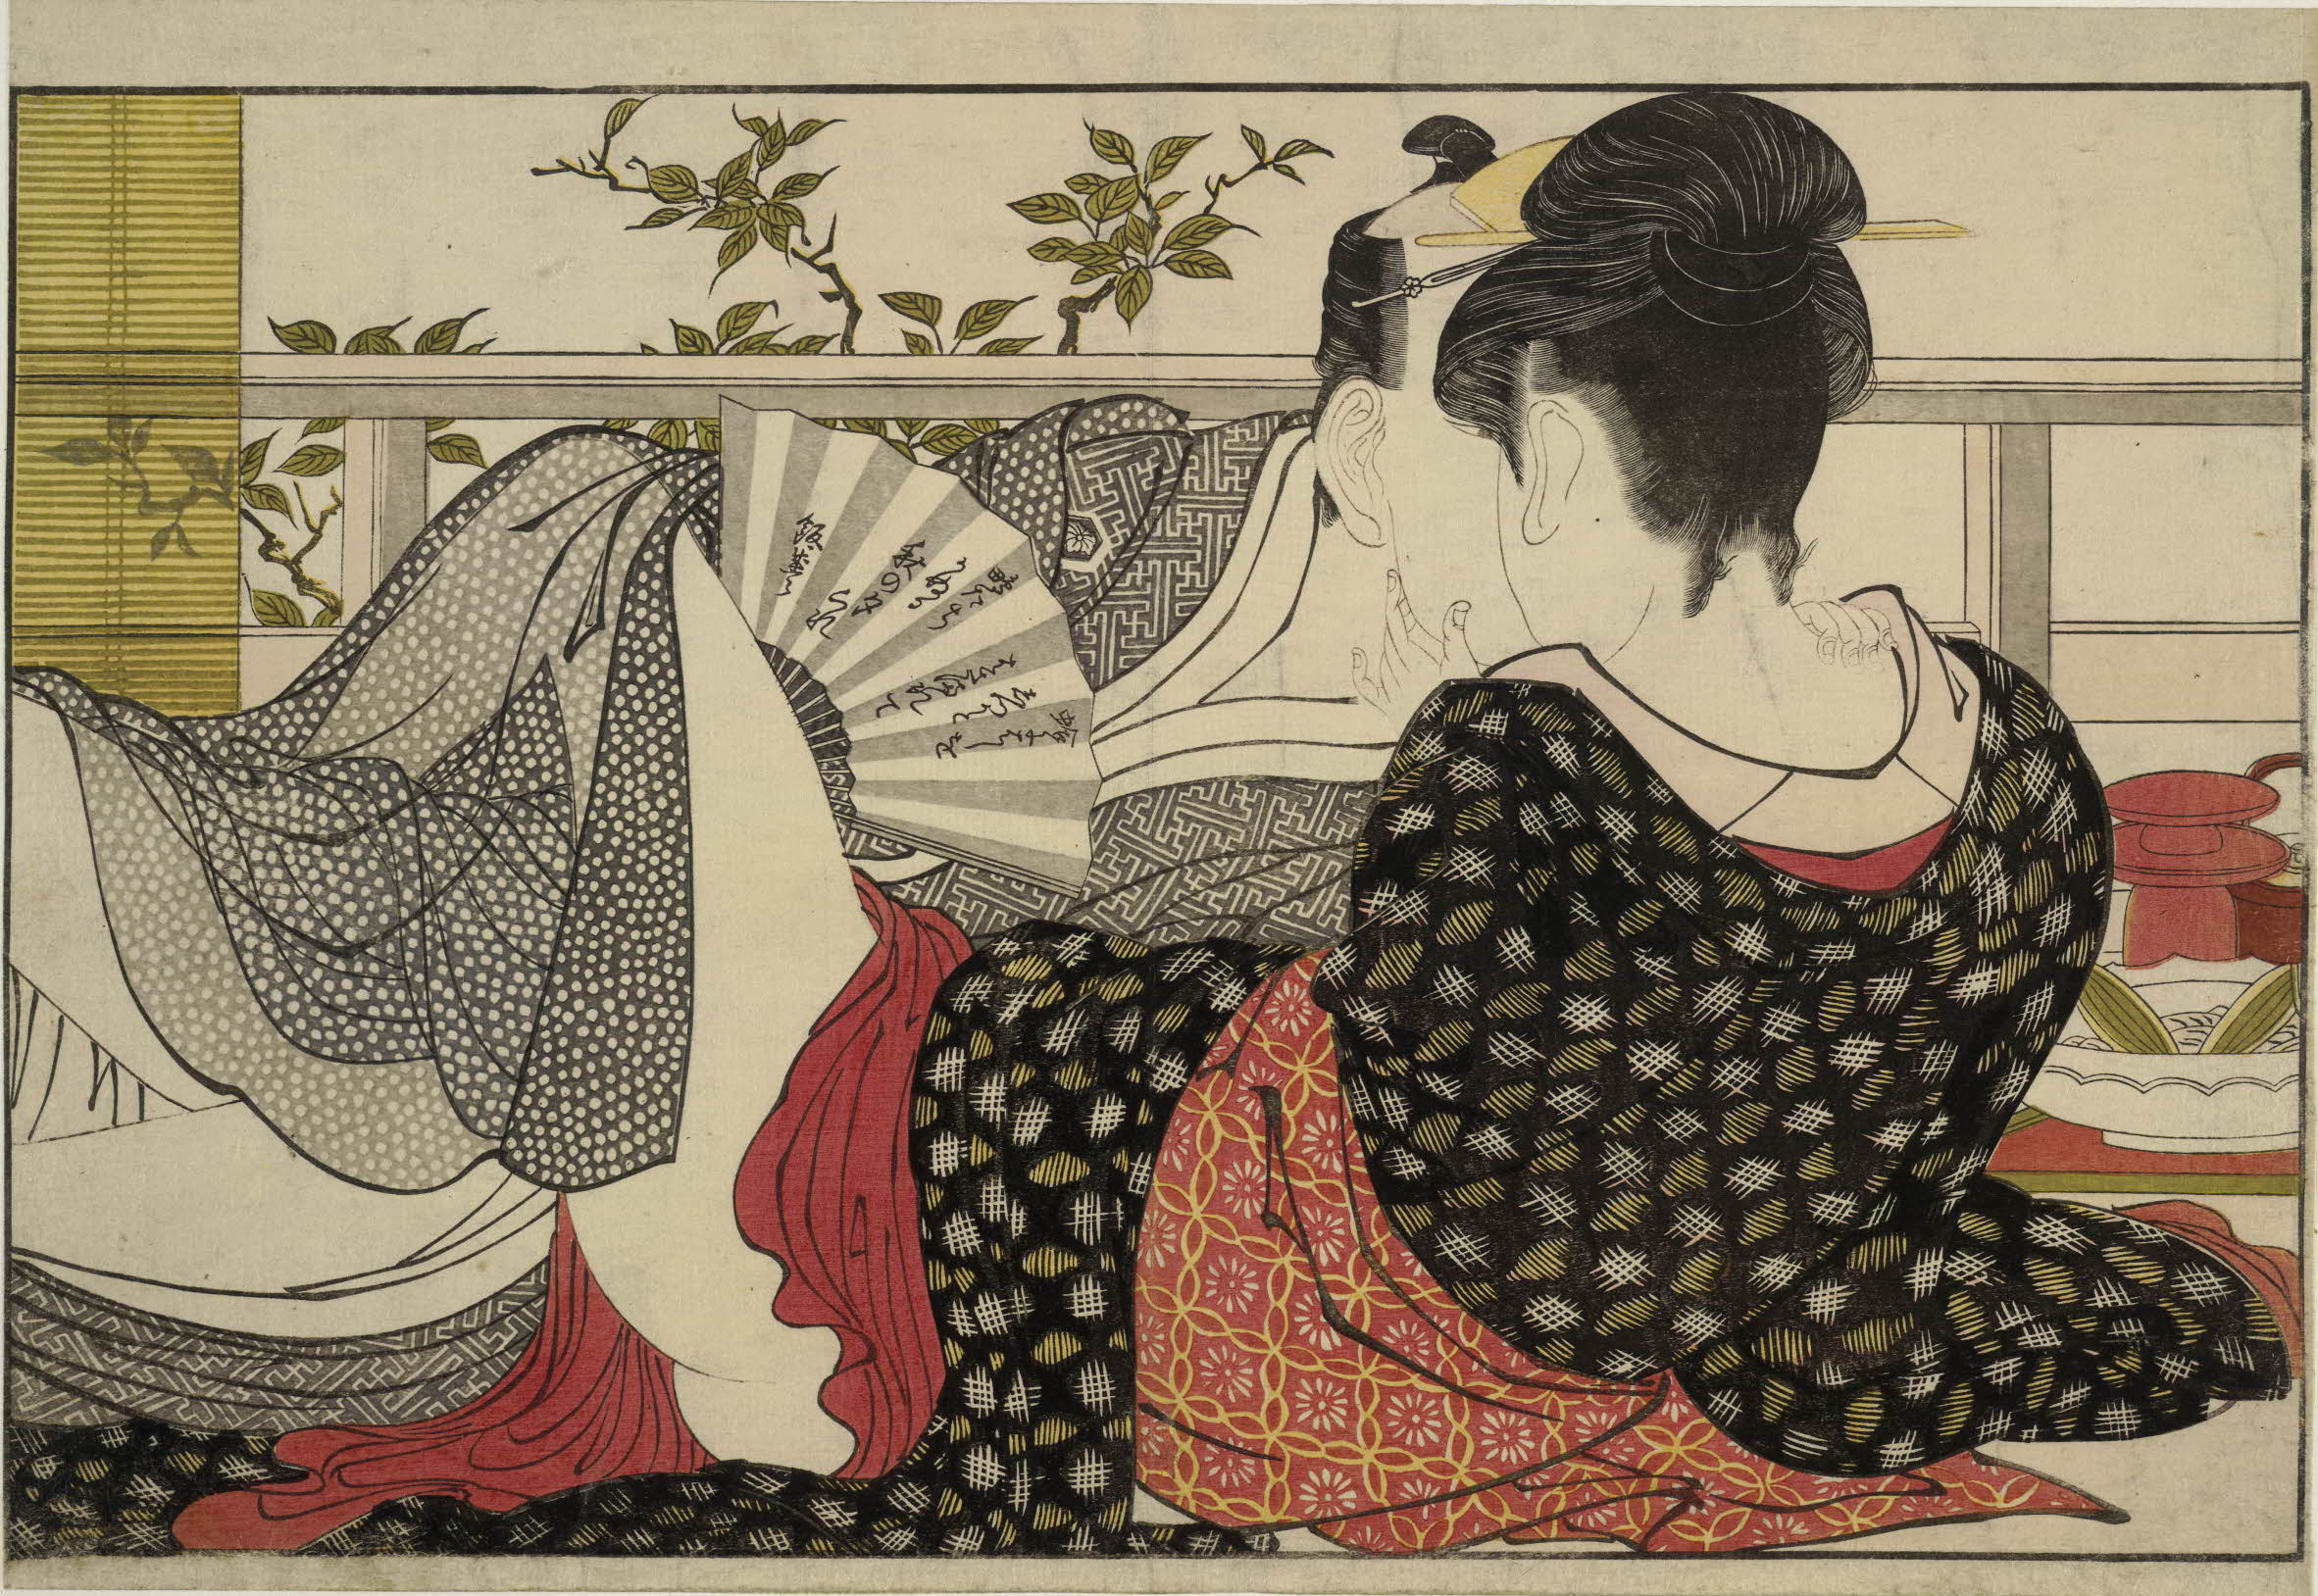 Utamakura (Yastığın Şiiri) by Kitagawa Utamaro - 1788 - 254 x 369 mm British Museum